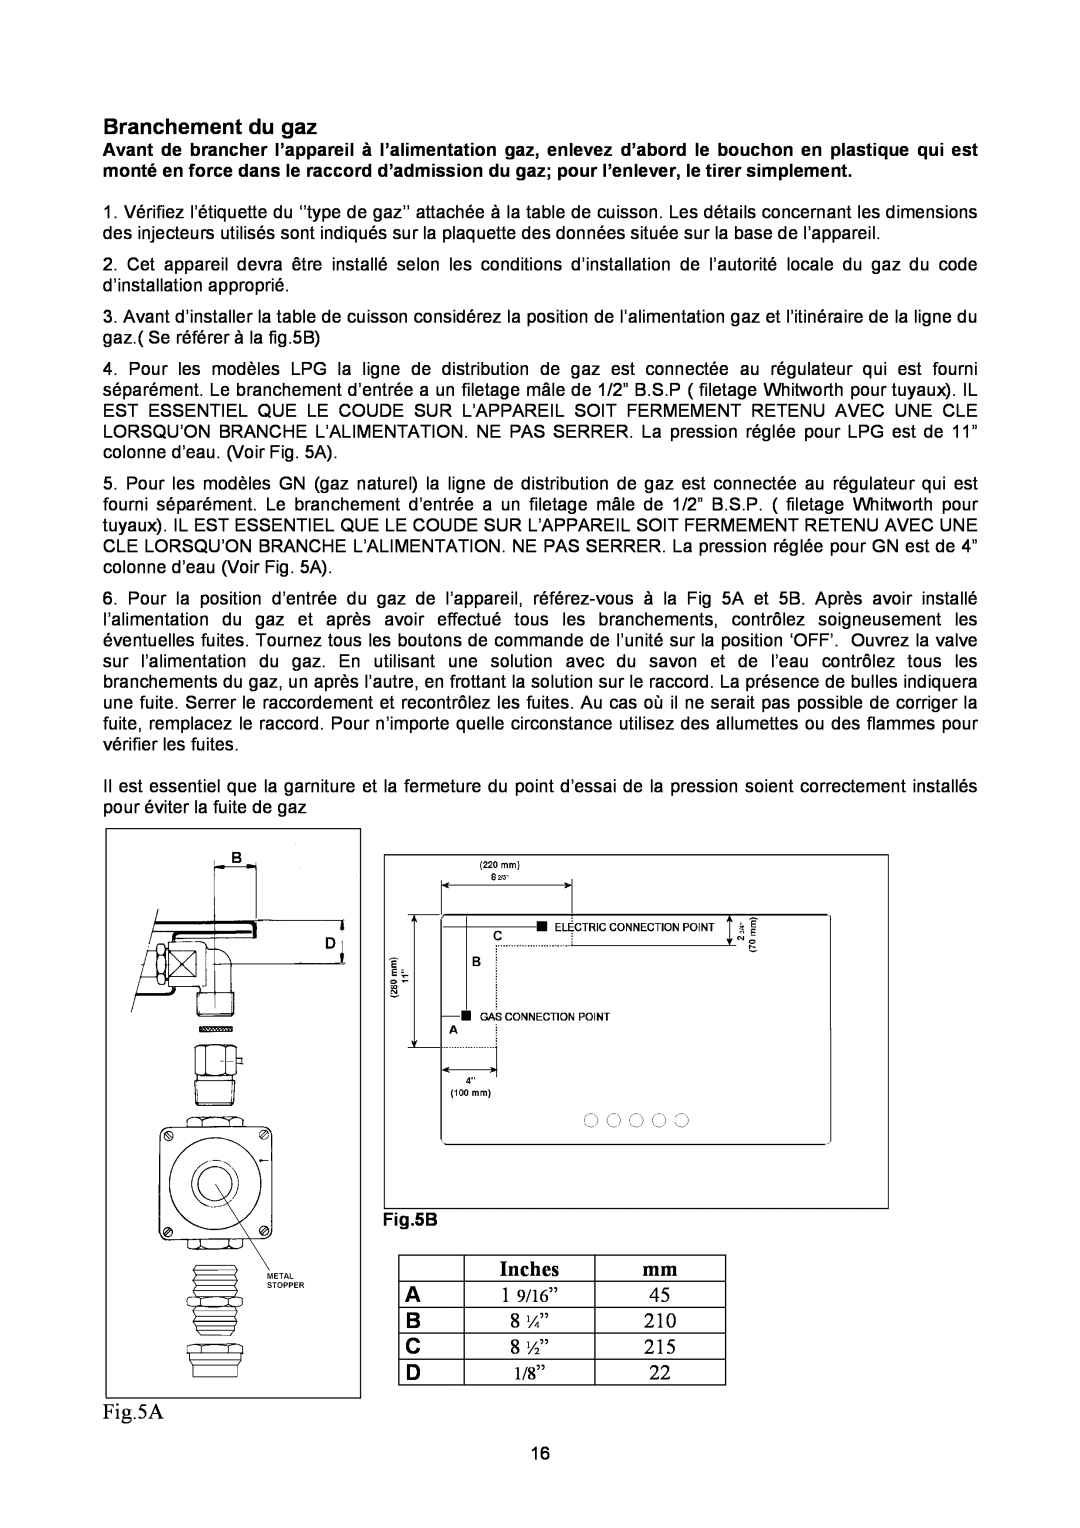 Bertazzoni P34 5 00 X dimensions Branchement du gaz, Inches, 8 ¼”, 8 ½”, A 